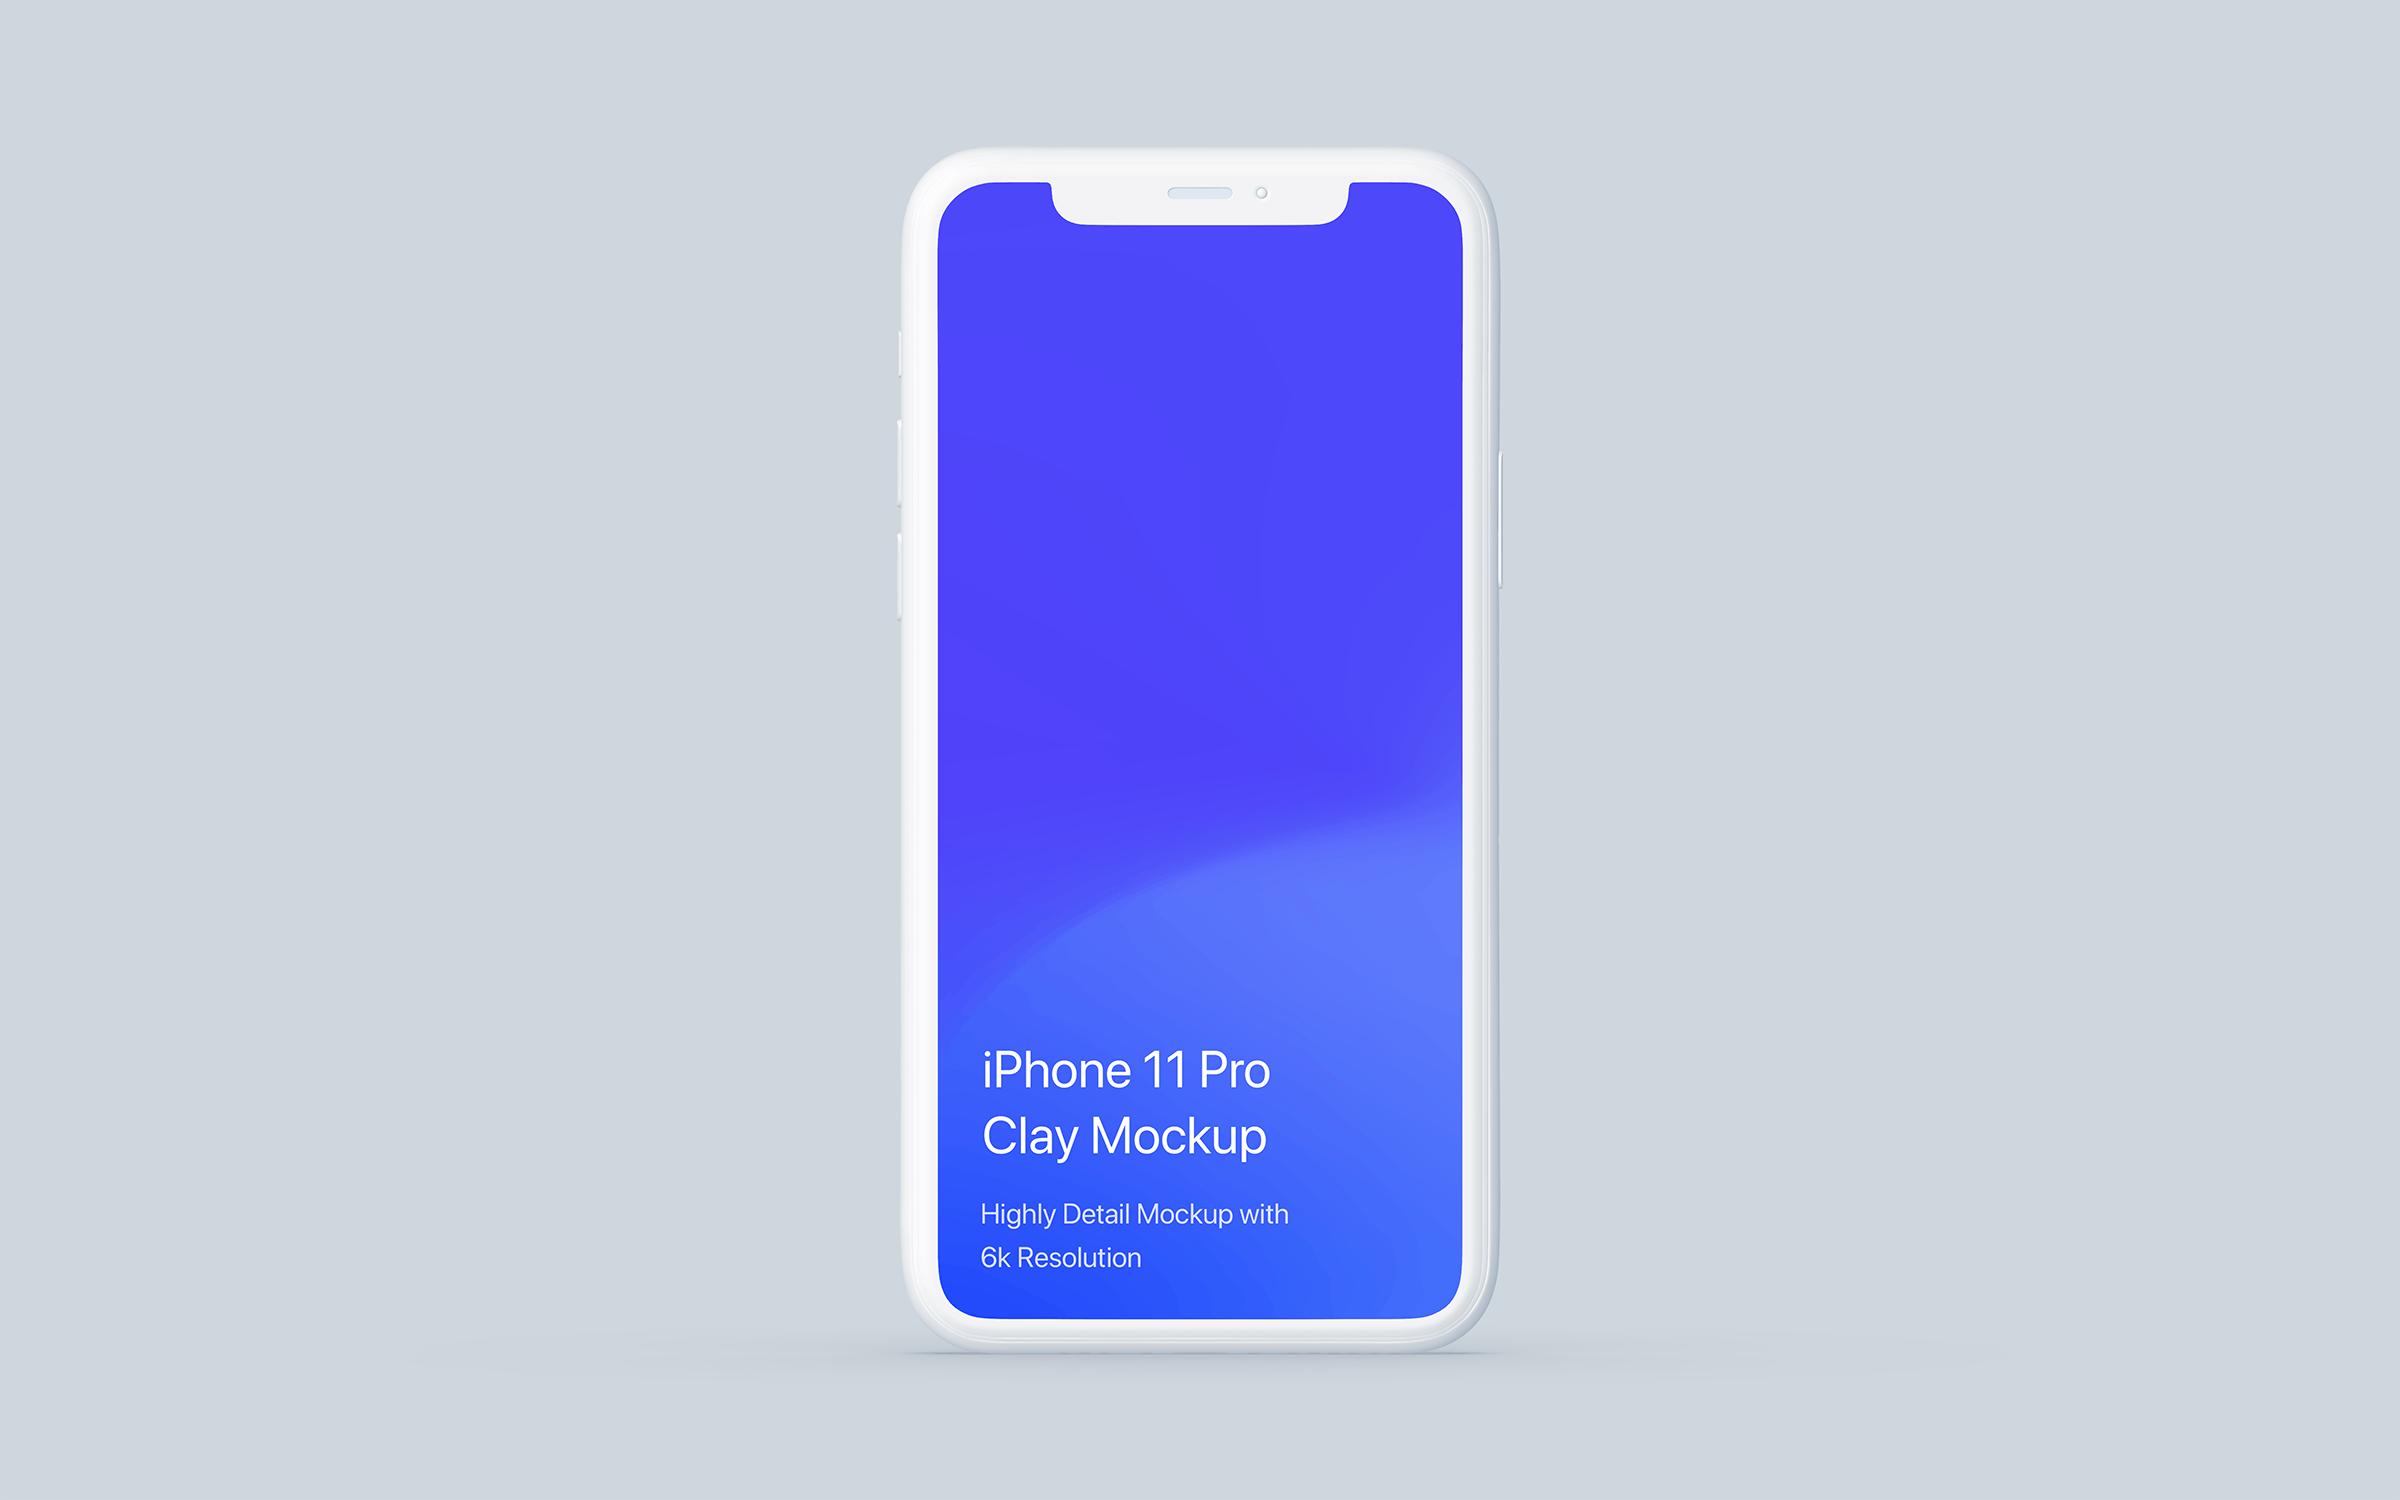 黏土陶瓷风格iPhone 11 Pro手机16图库精选样机模板 iPhone 11 Pro Mockup – Clay Mockup Pack插图(4)